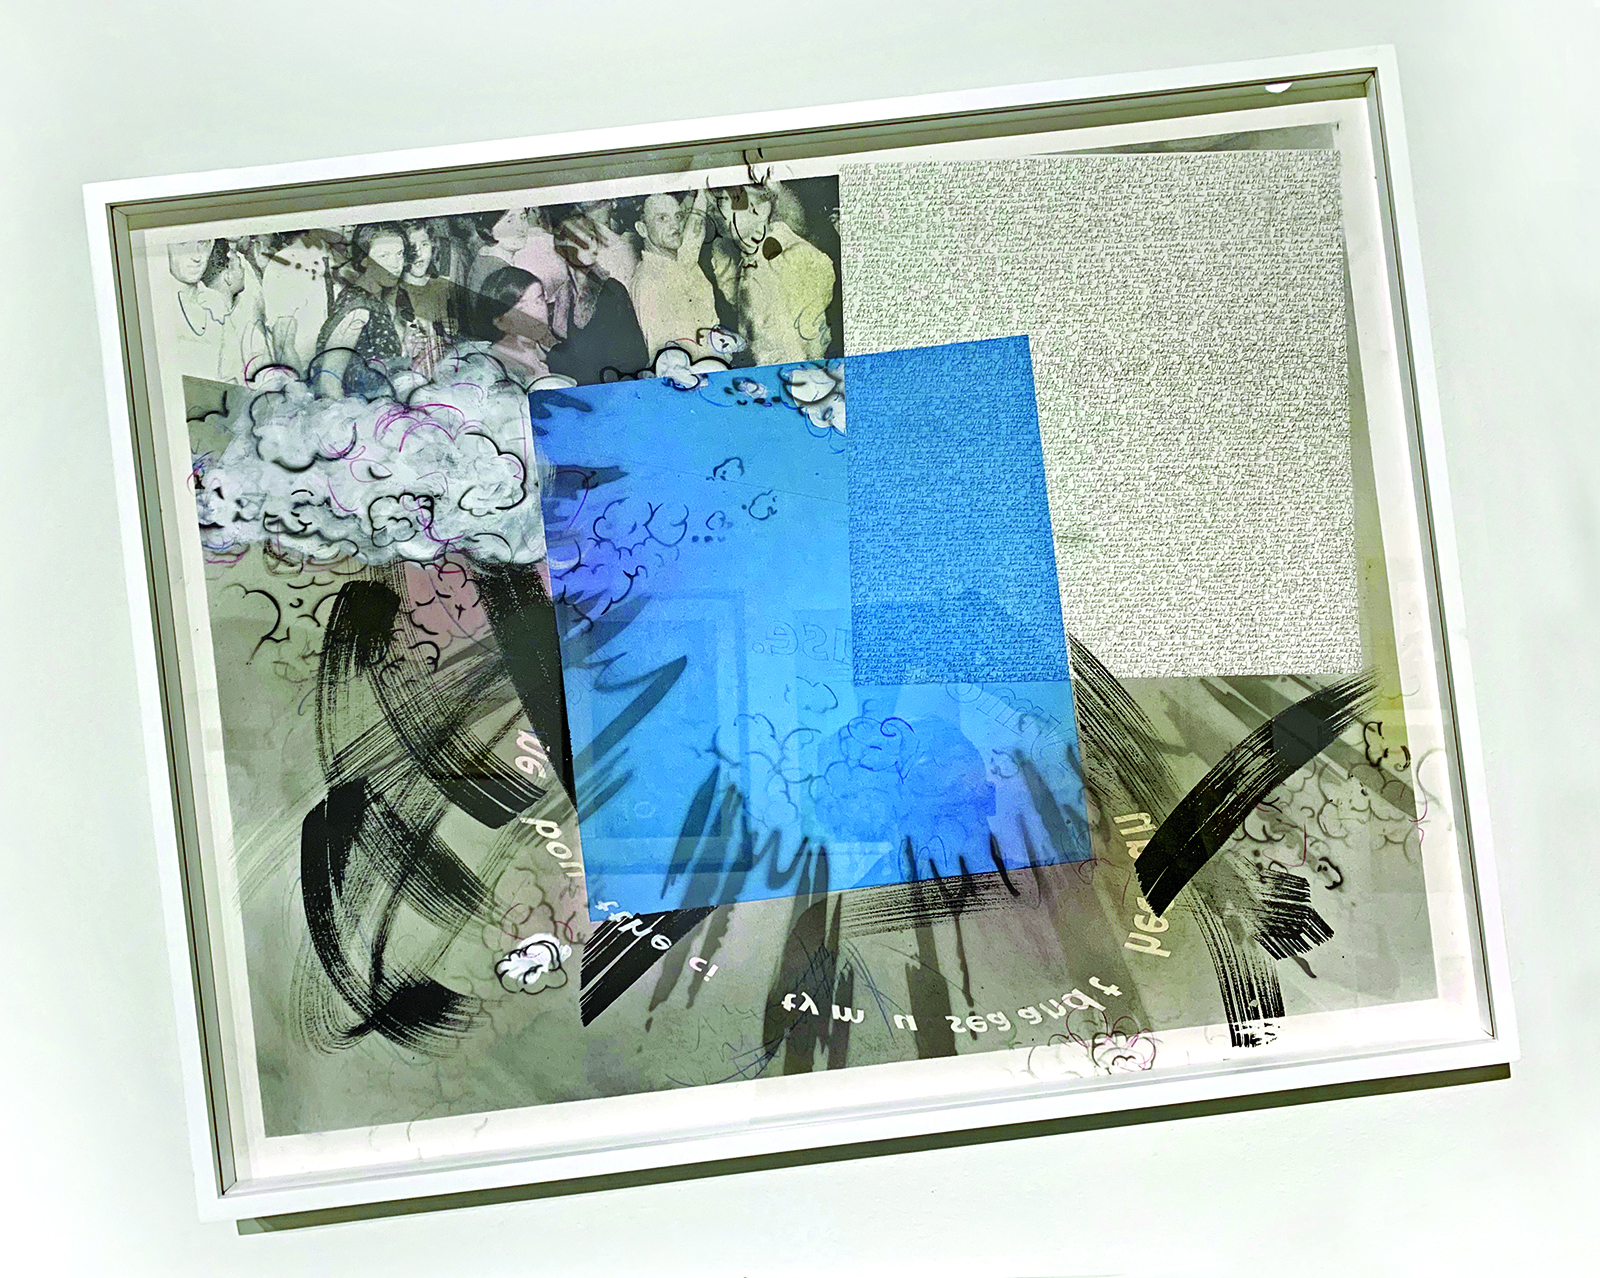 Nyeema Morgan, 'Dear Arlene (Mom)', 2019, screenprint, acrylic, Sumi ink, and graphite